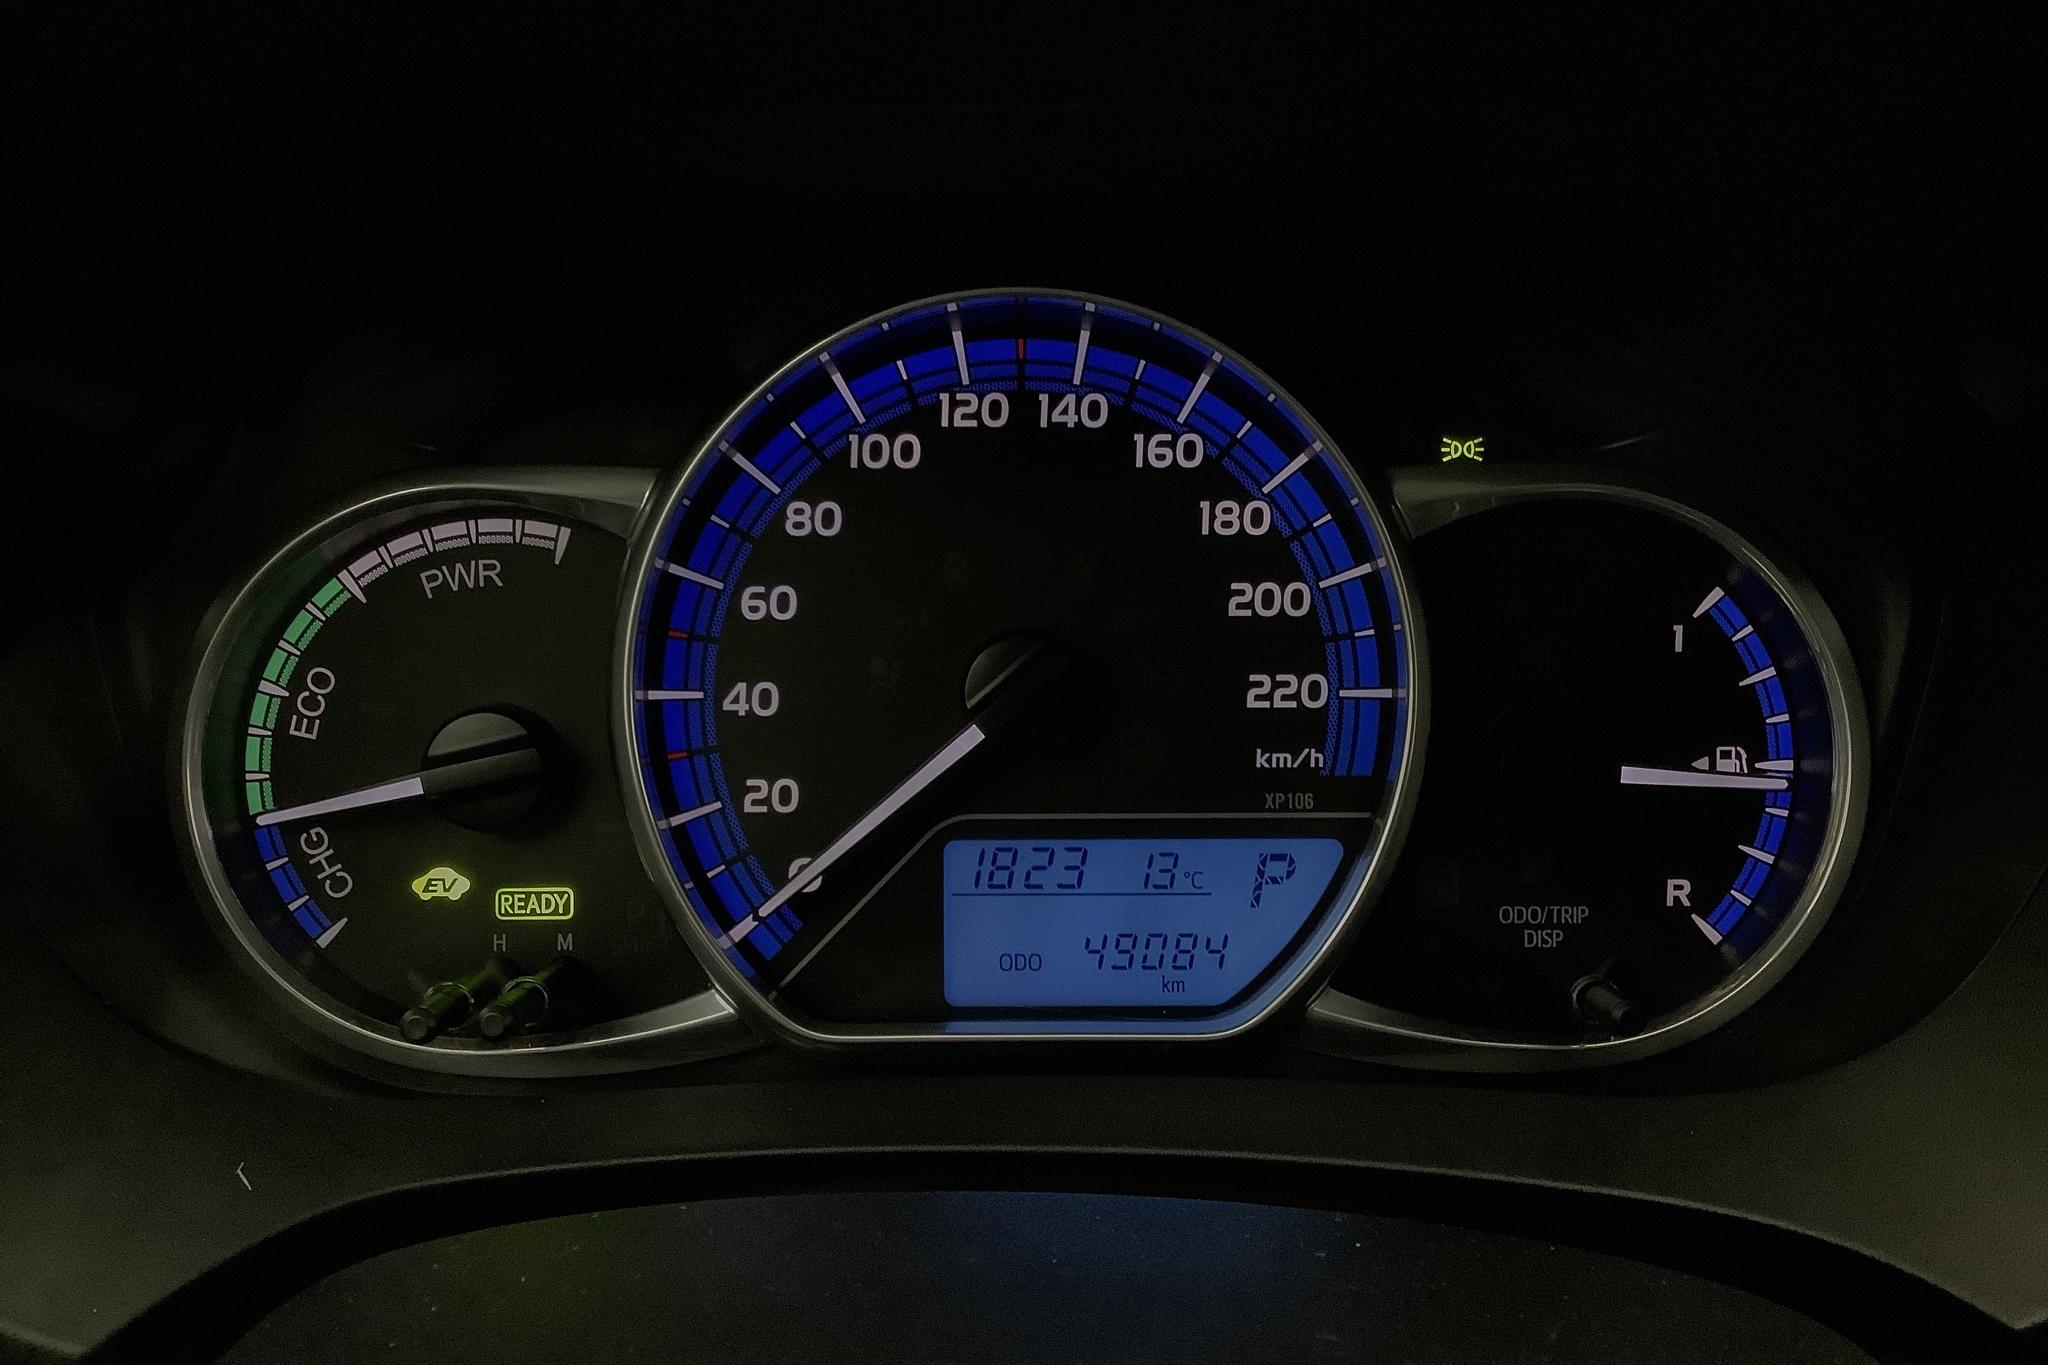 Toyota Yaris 1.5 HSD 5dr (75hk) - 4 909 mil - Automat - blå - 2015